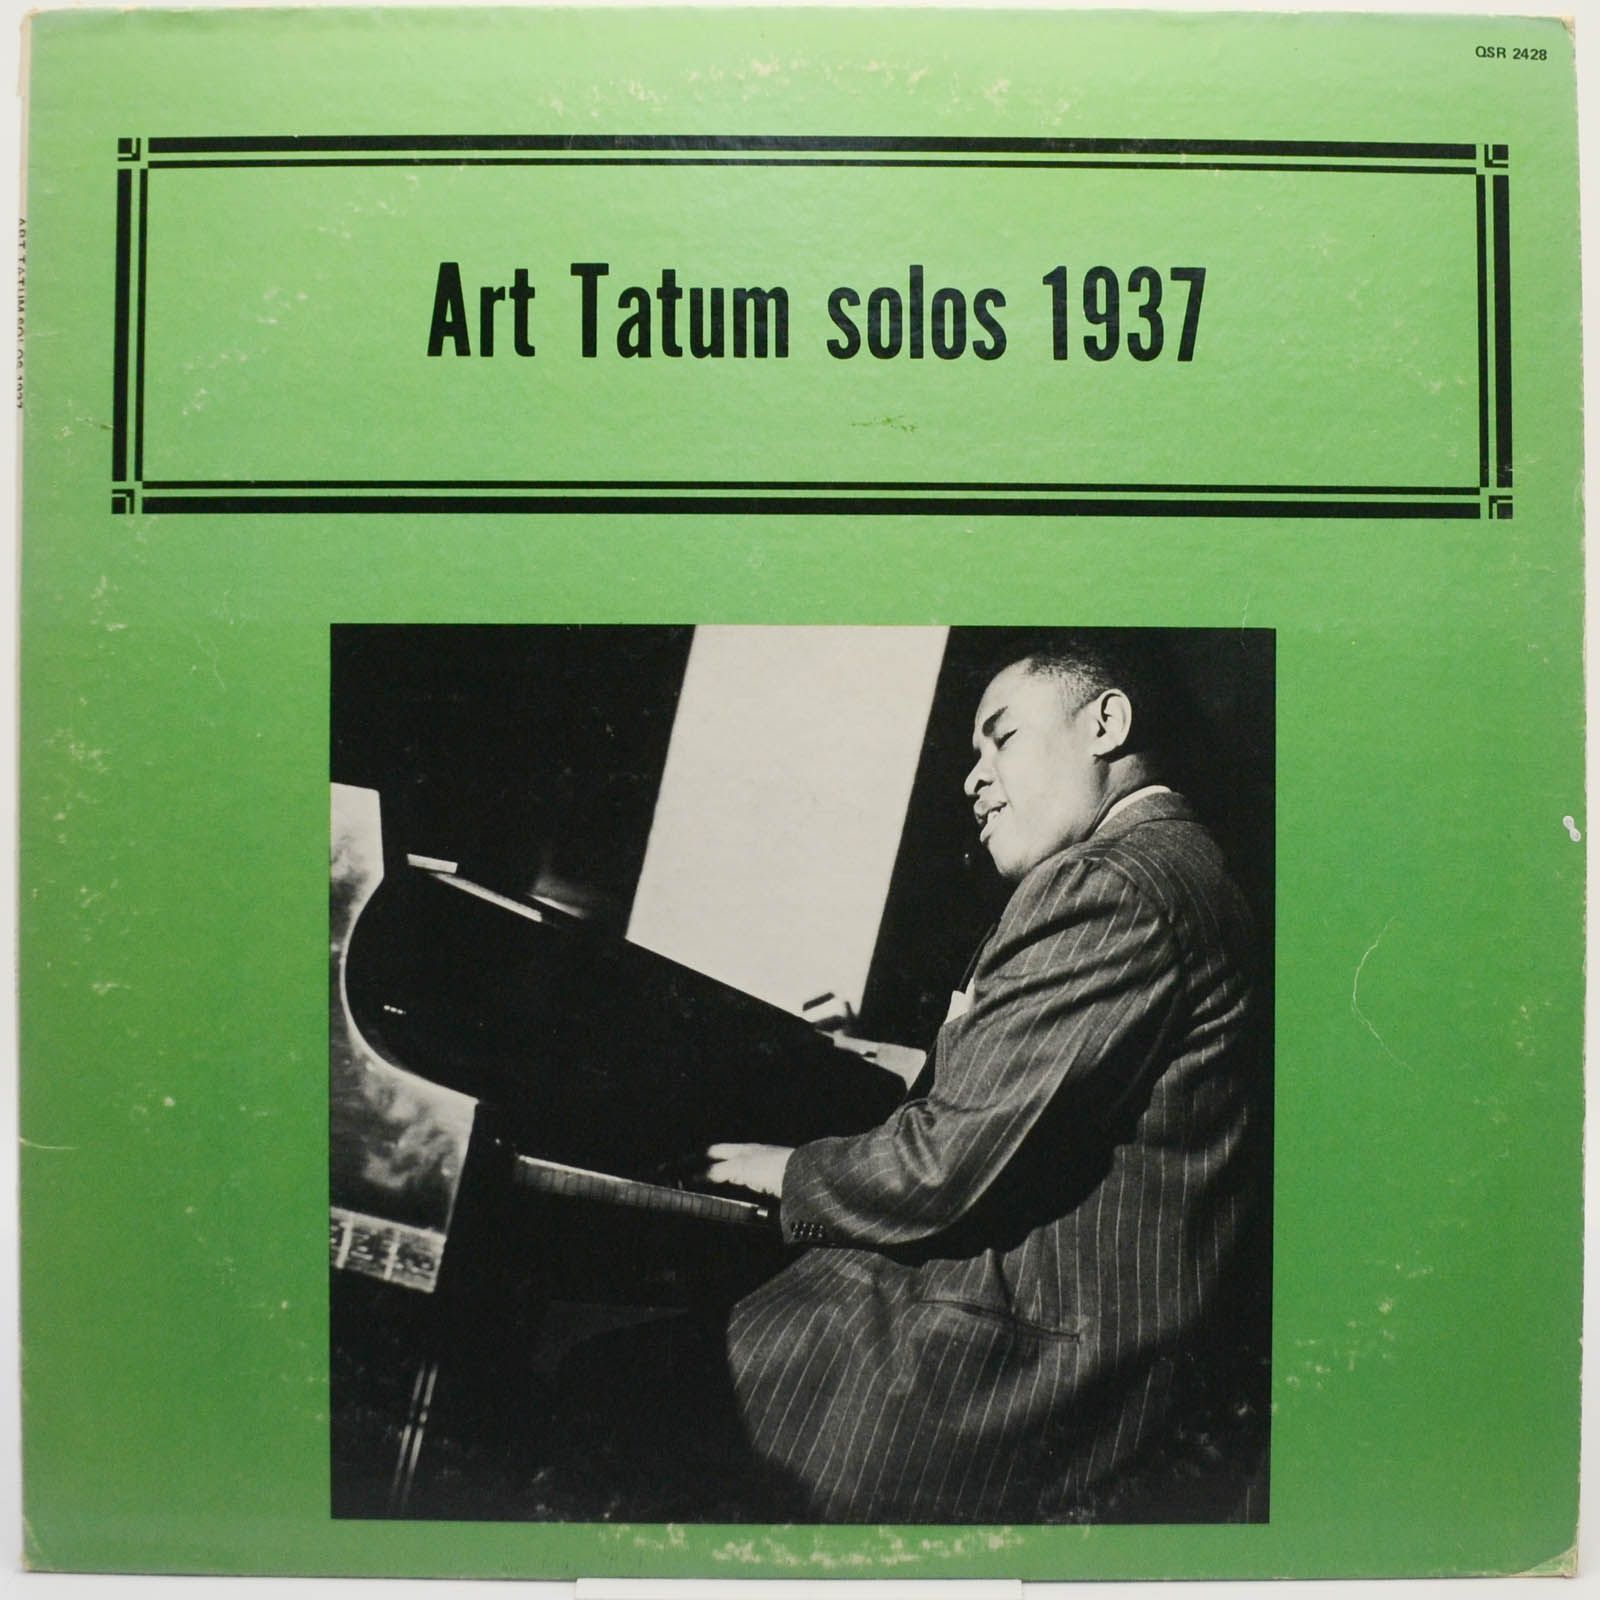 Art Tatum — Solos 1937 (USA), 1974